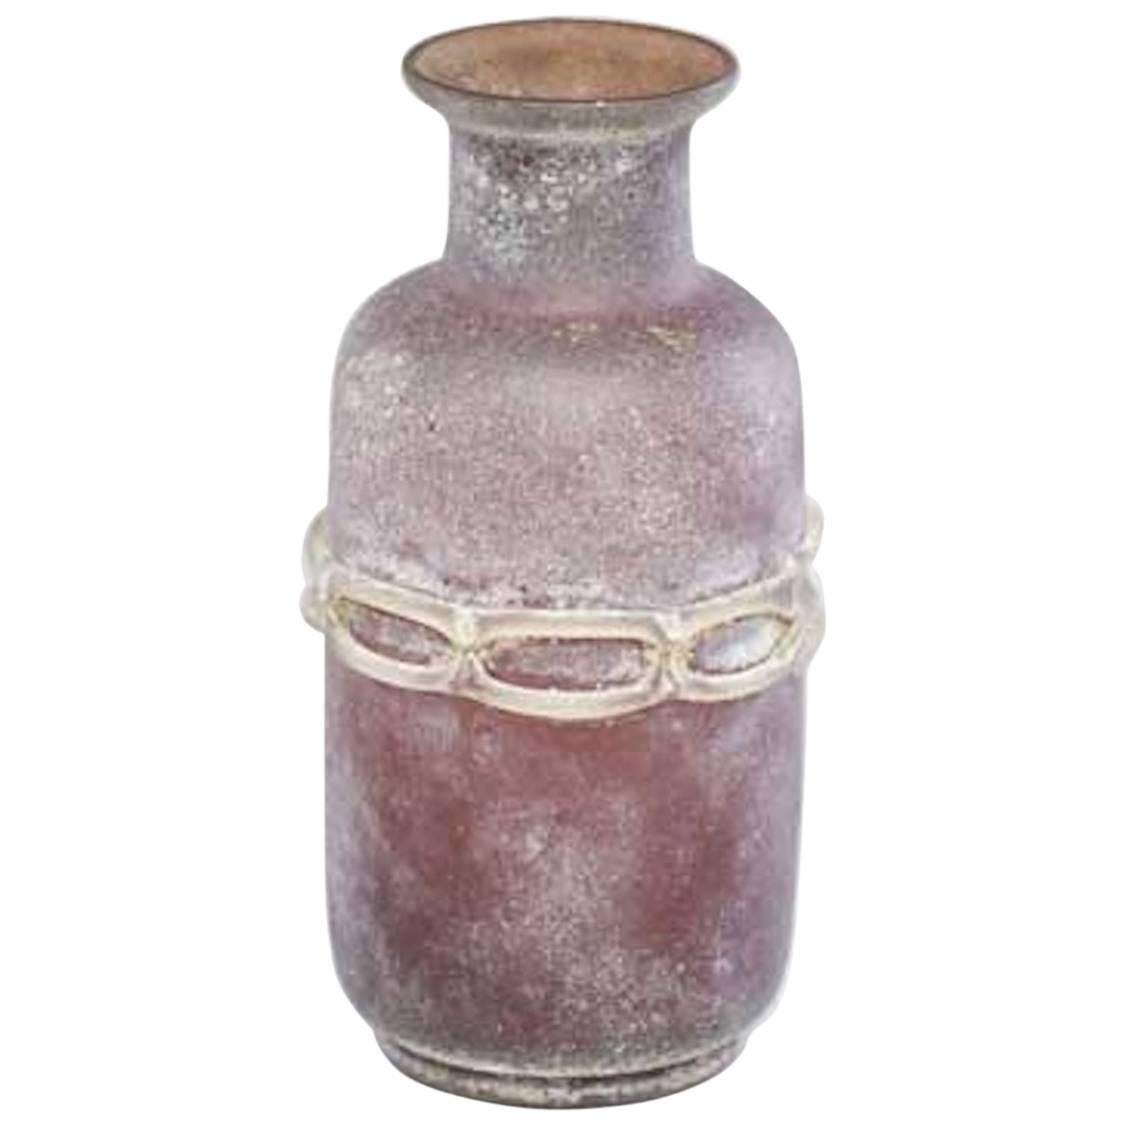 Seguso Scavo Murano Glass Vase